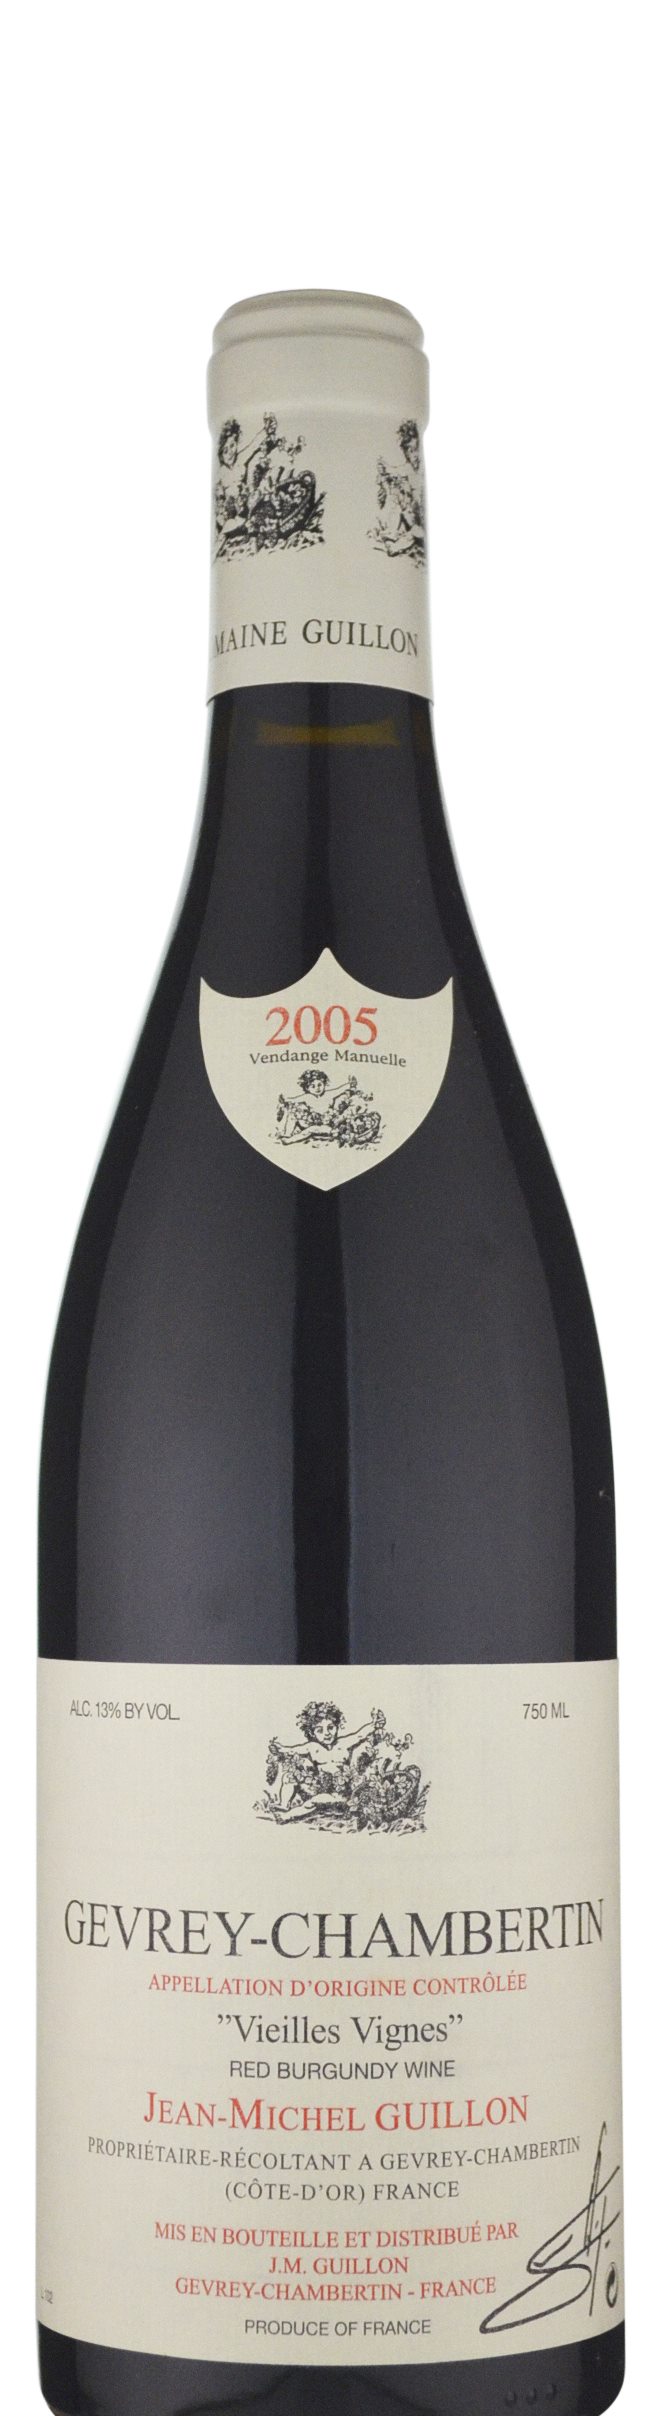 Domaine Jean-Michel Guillon Gevrey-Chambertin Vielles Vignes Burgundy 2005